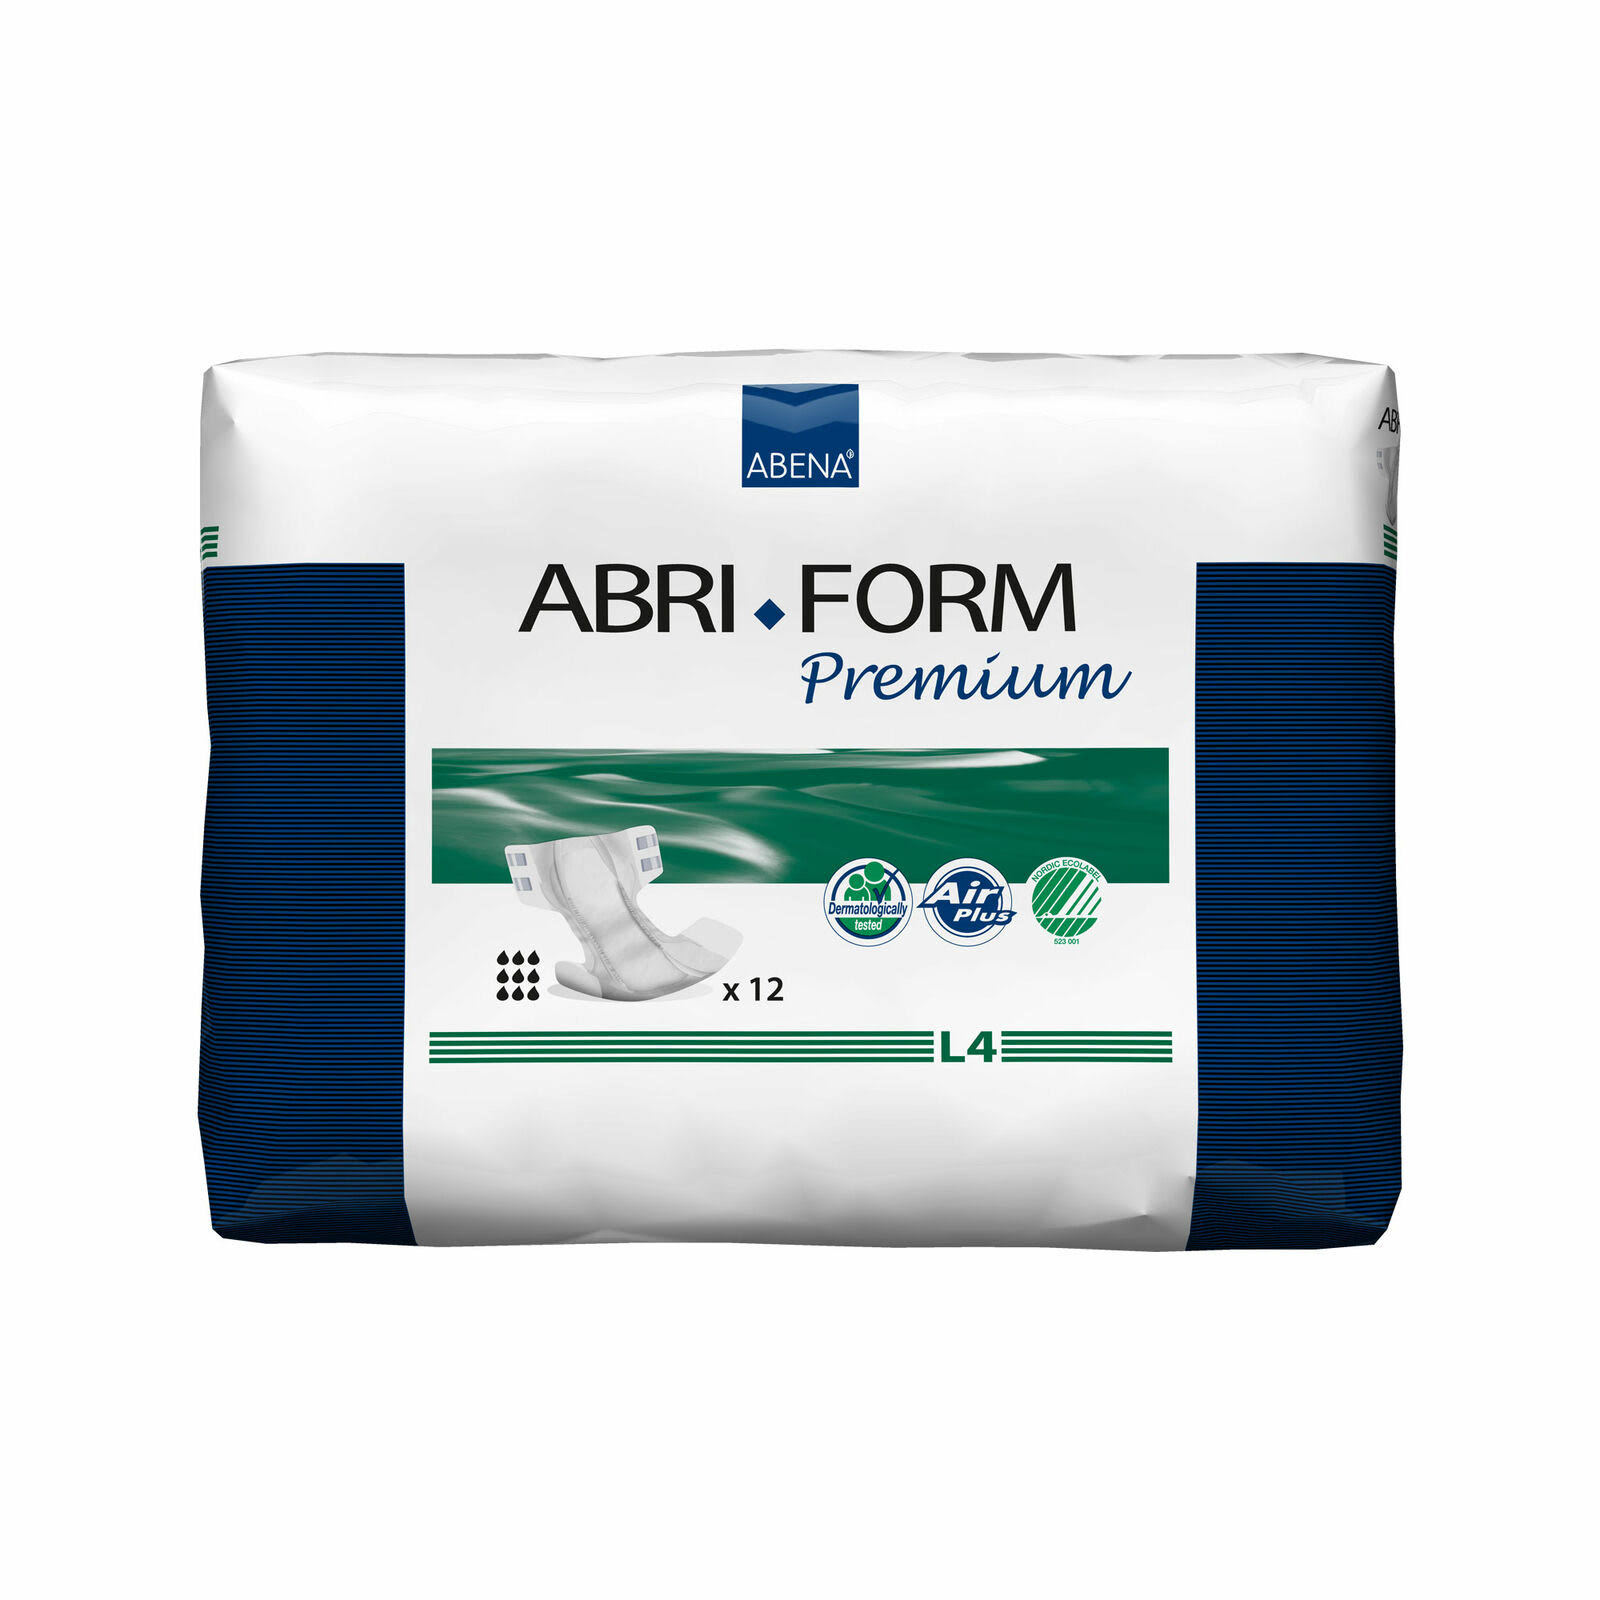 Abena Abri-Form Premium Briefs - Large, x12